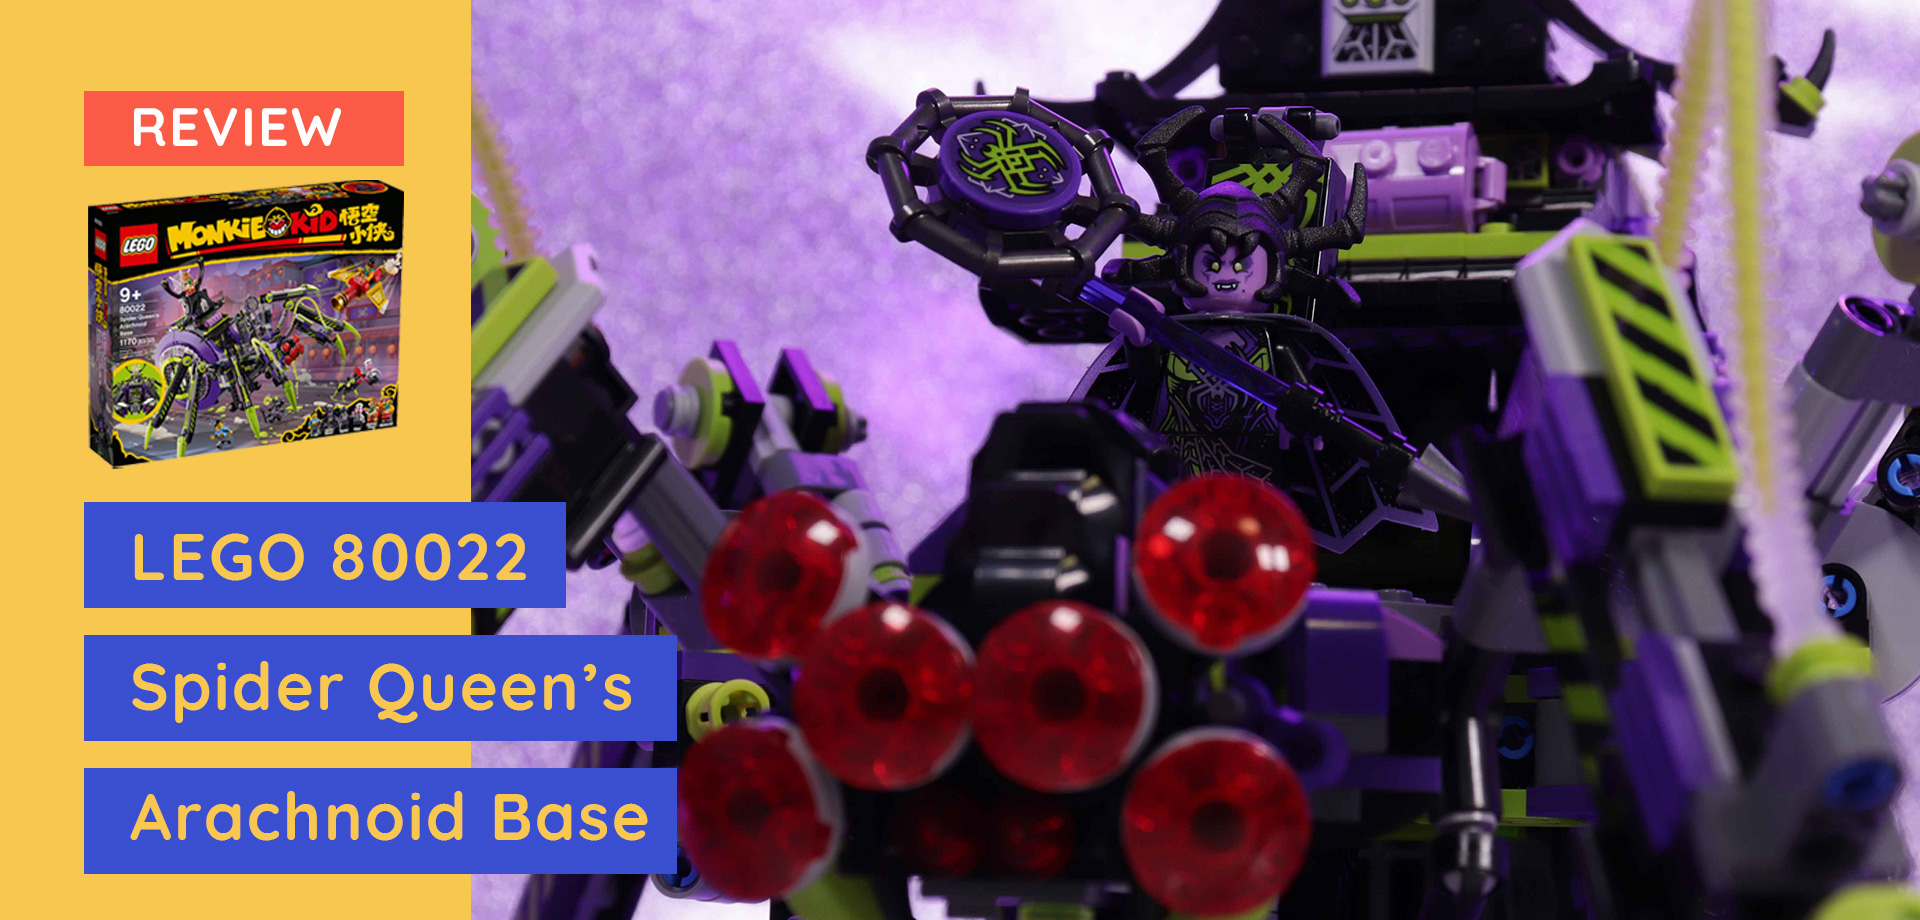 modvirke Dolke Aske Review: LEGO 80022 Monkie Kid - Spider Queen's Arachnoid Base